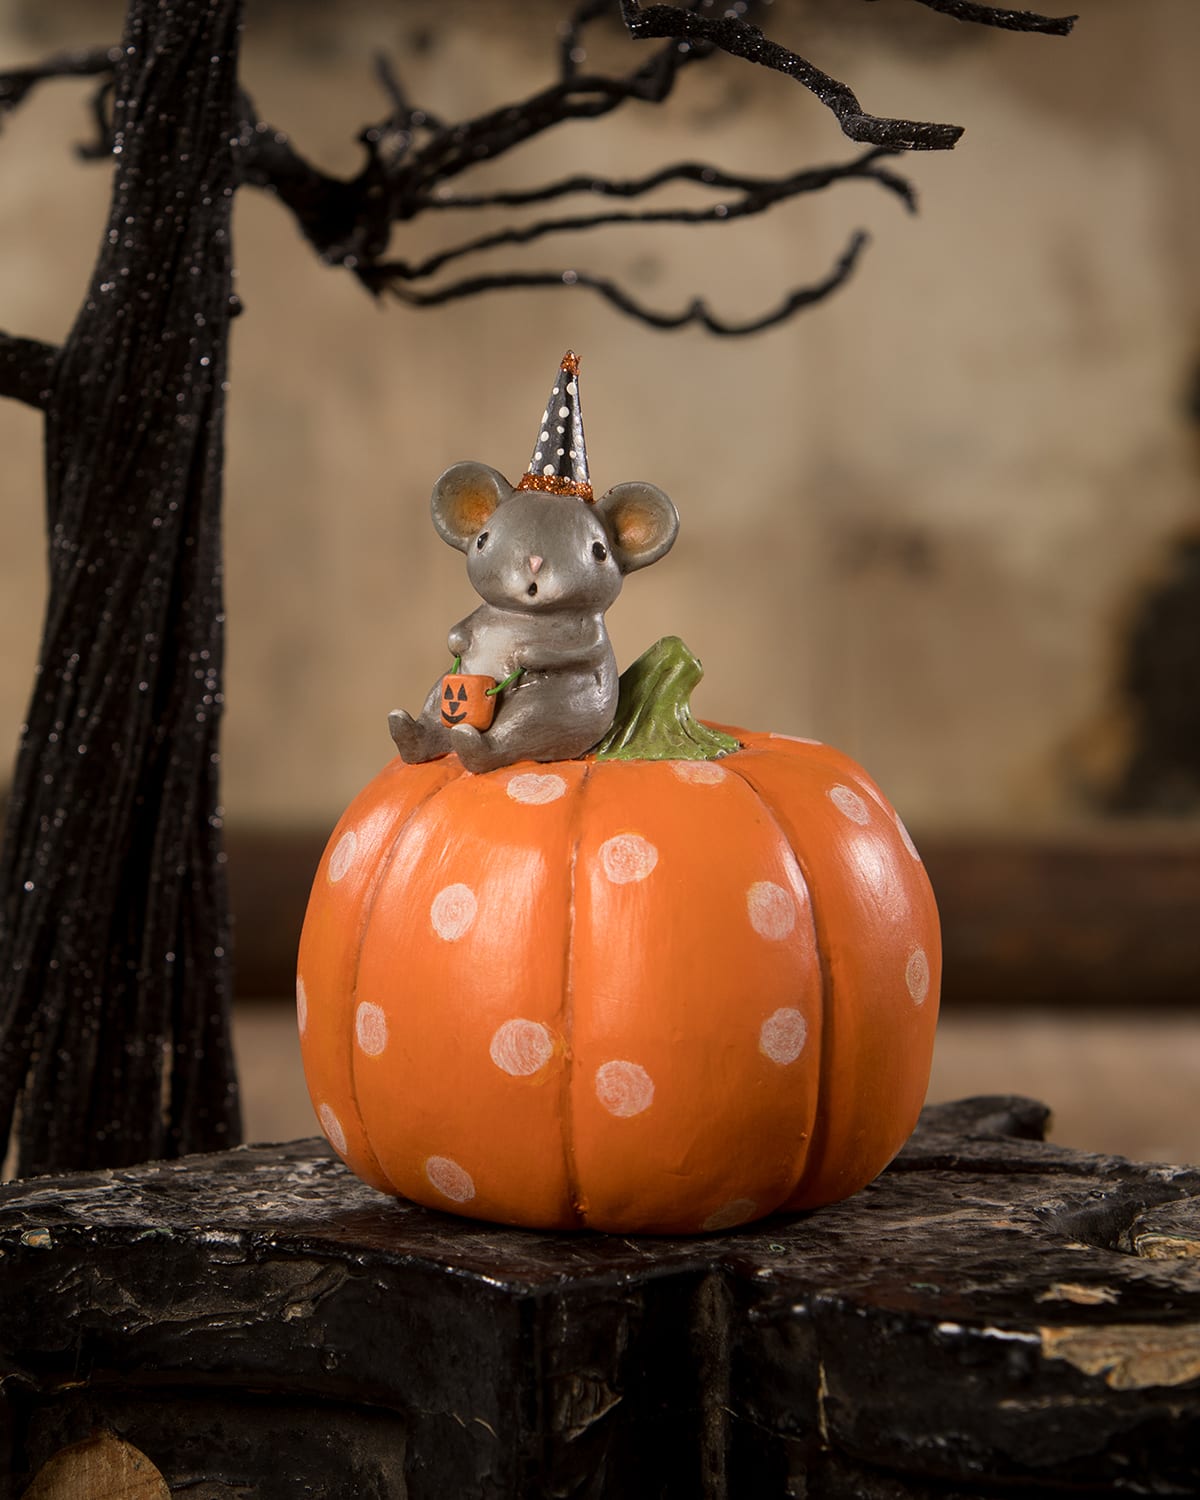 Mouse On Pumpkin Halloween Decoration